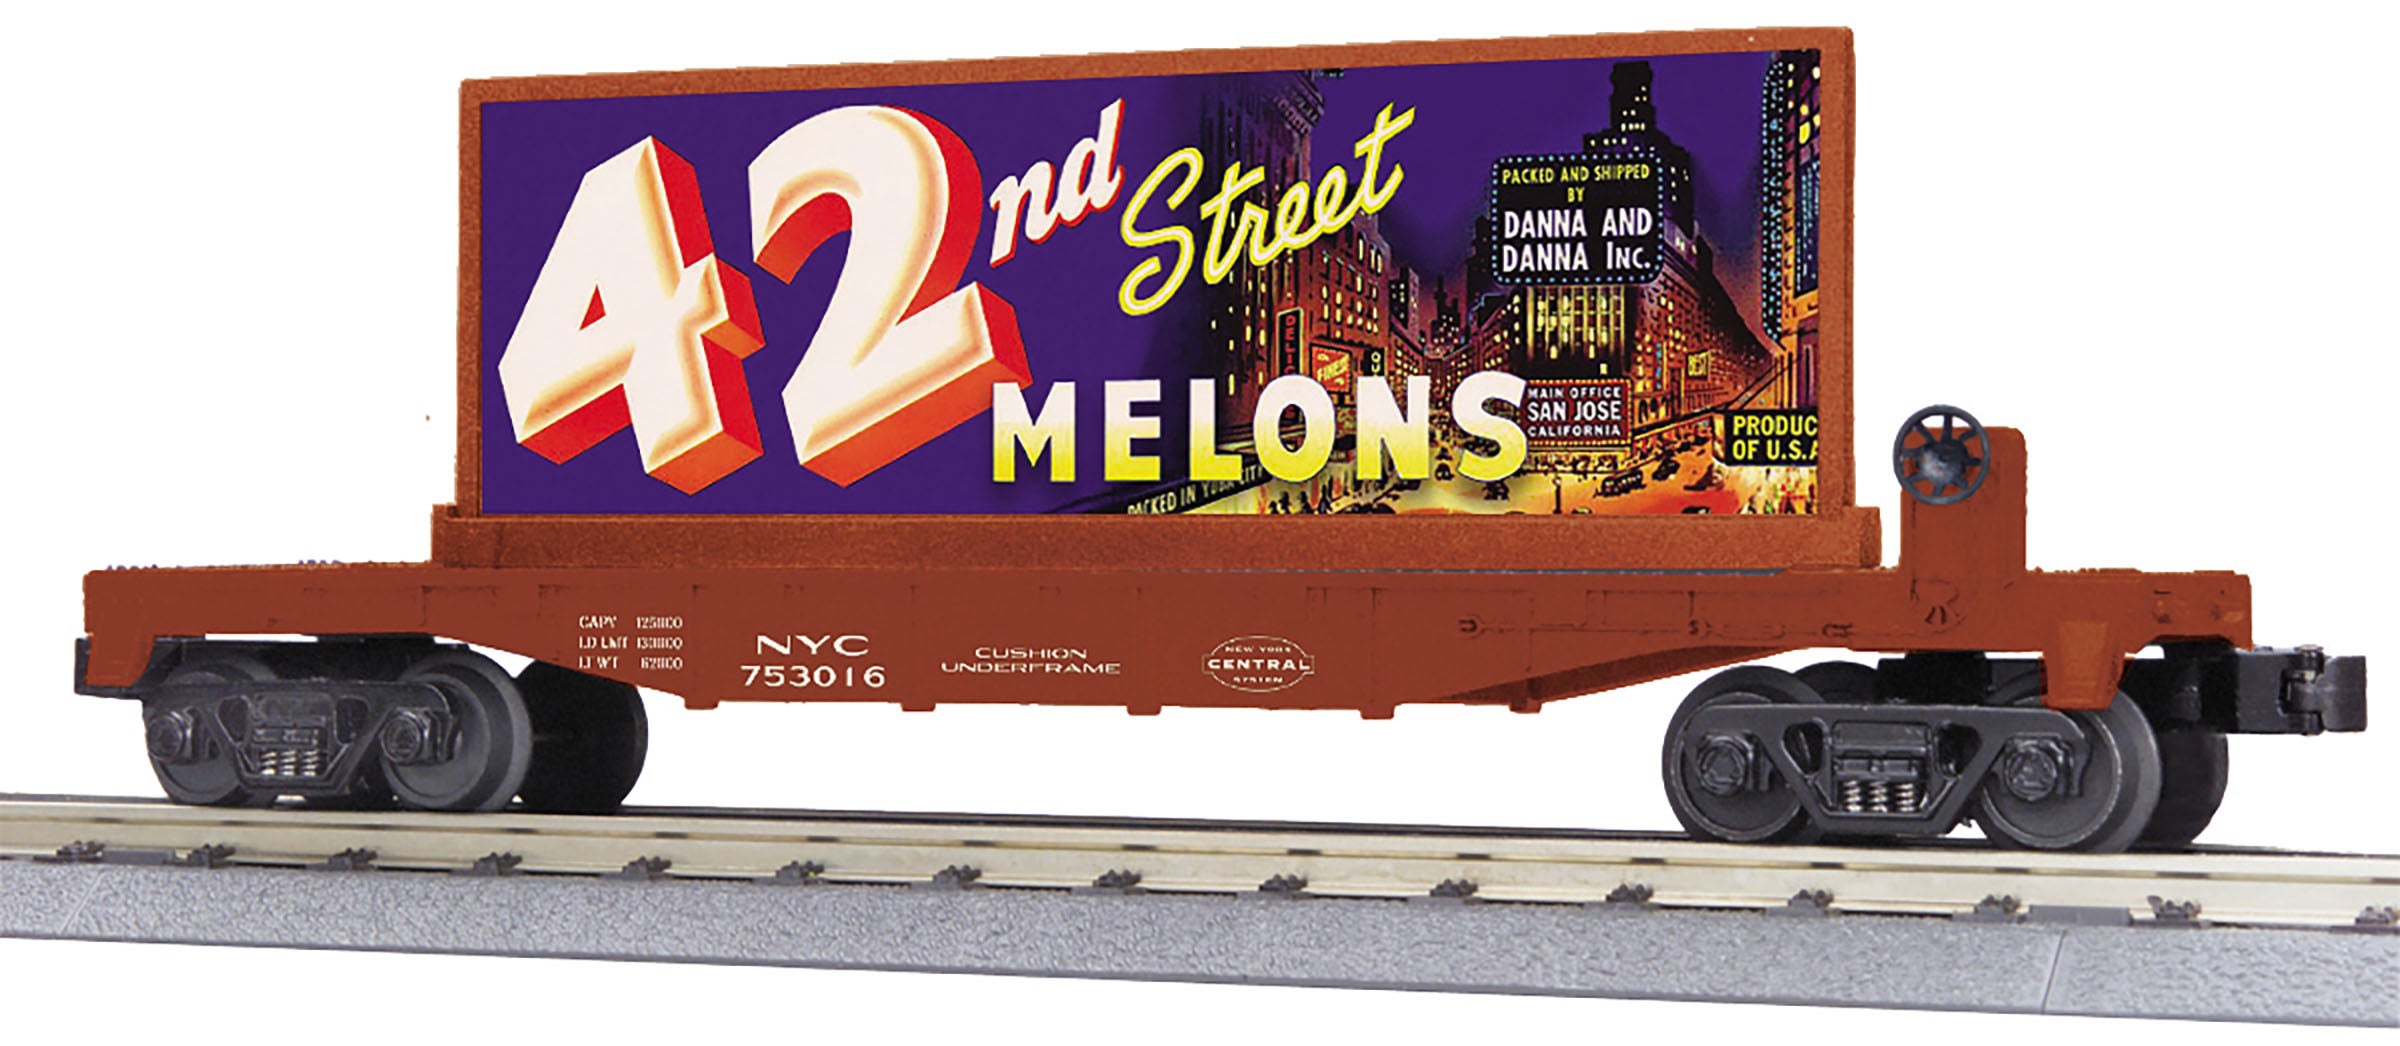 MTH 30-76859 - Flat Car "New York Central" #753016 w/ Billboard (42nd Street Mellons)